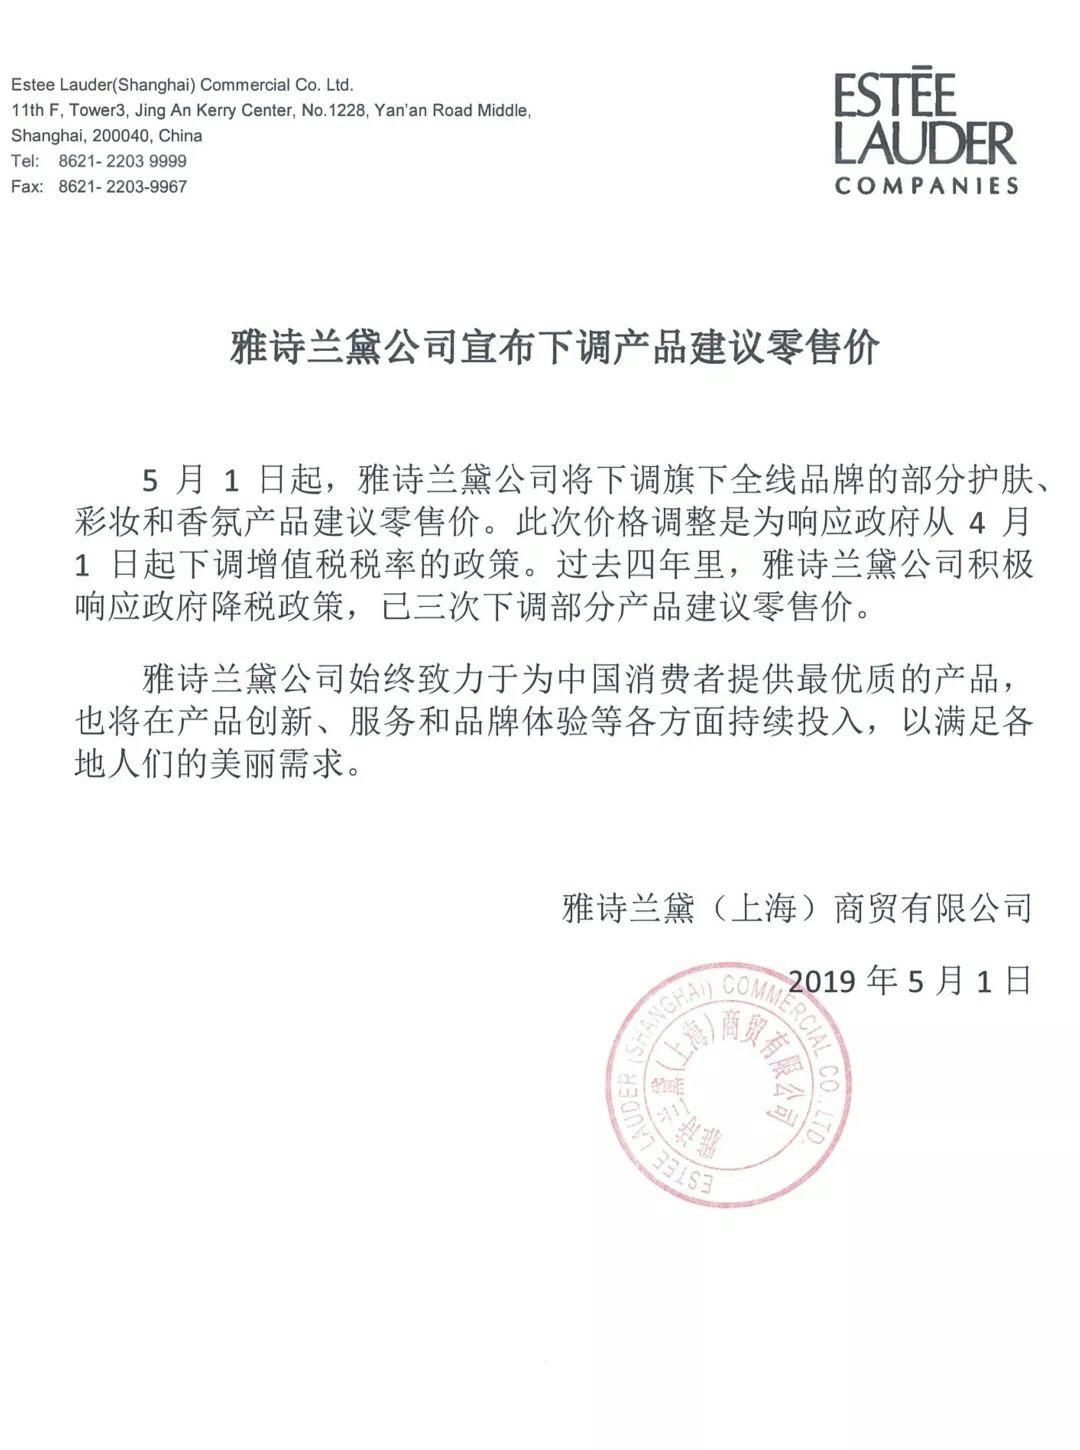 Estée Lauder Companies' full statement in Mandarin.